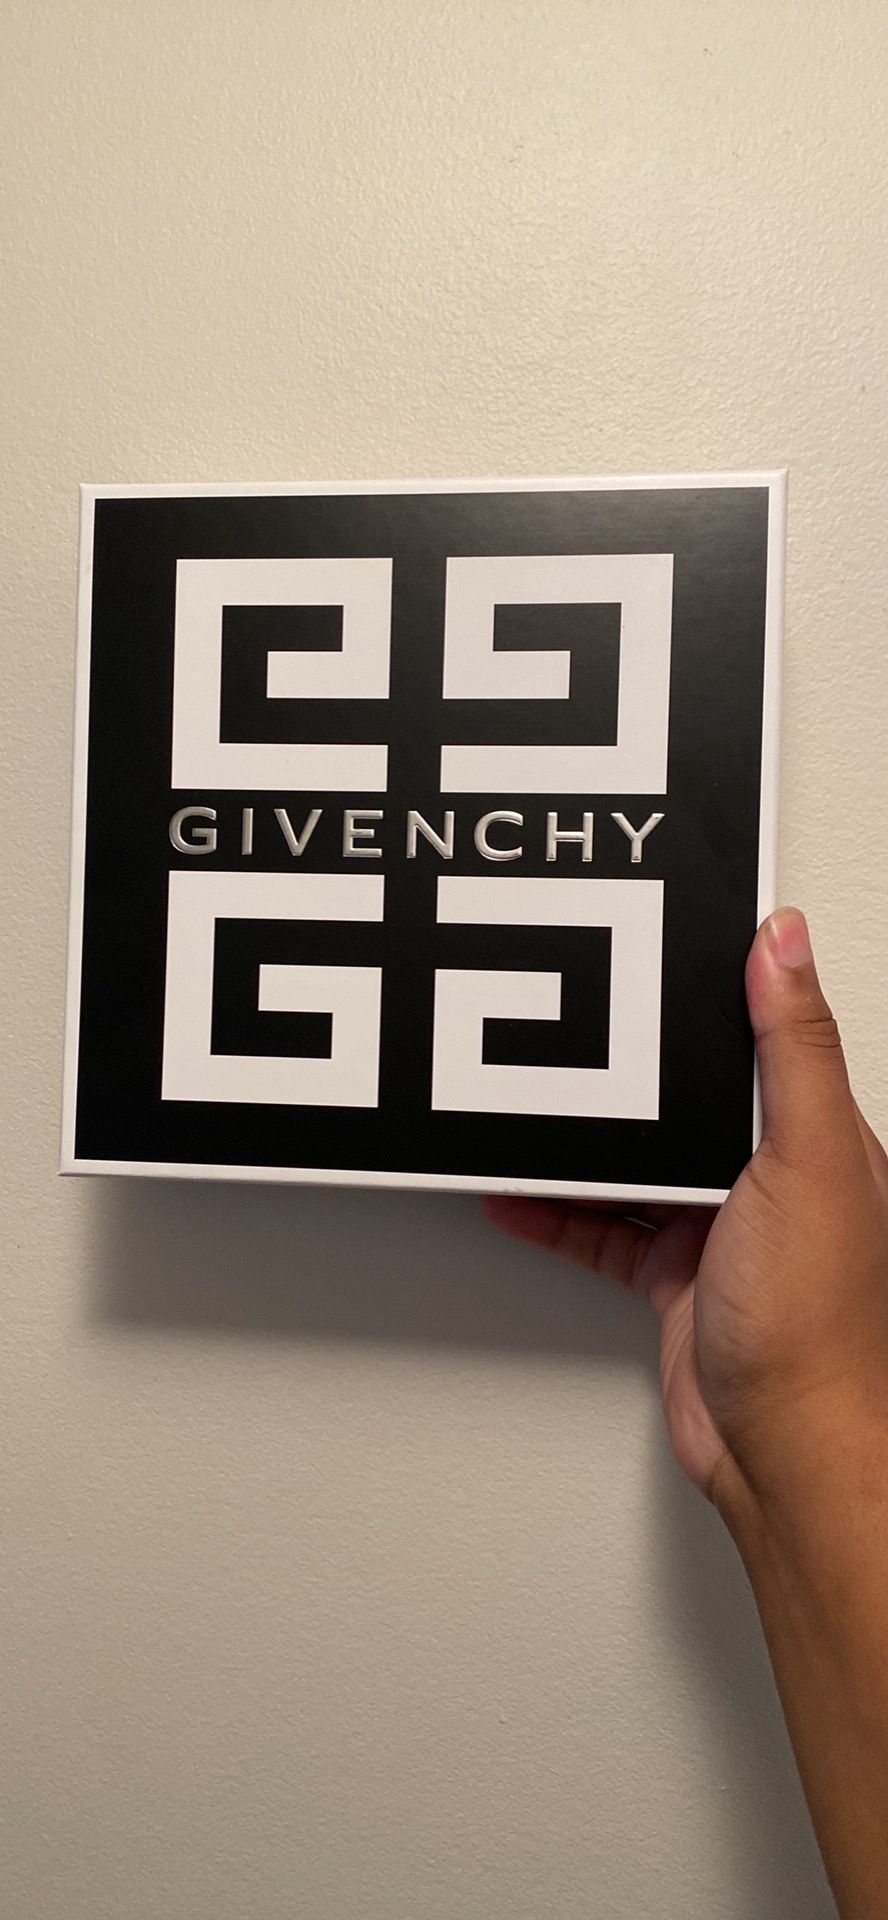 Givenchy Men’s Cologne